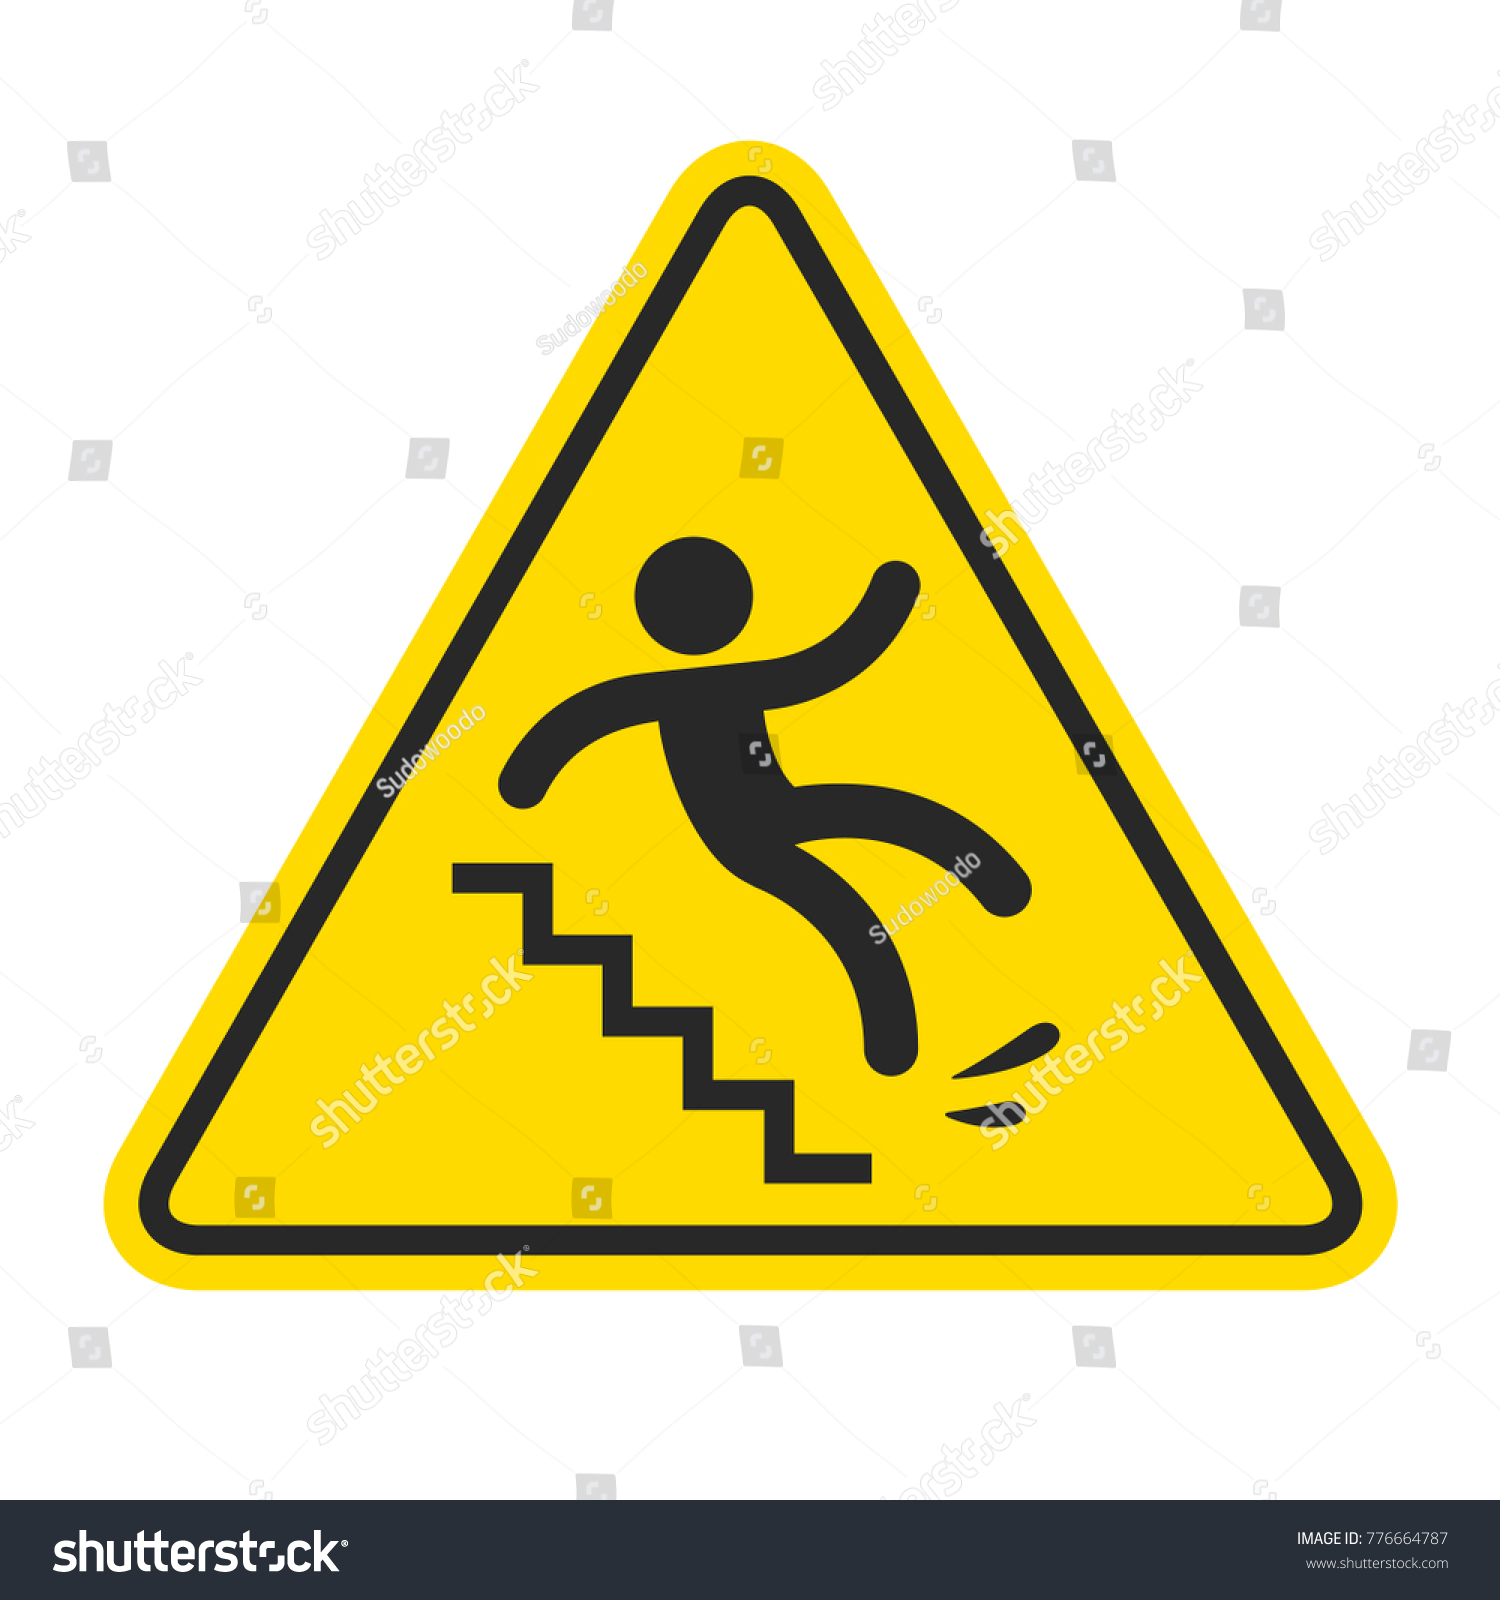 Slippery Stairs Warning Yellow Triangle Symbol Stock Illustration ...